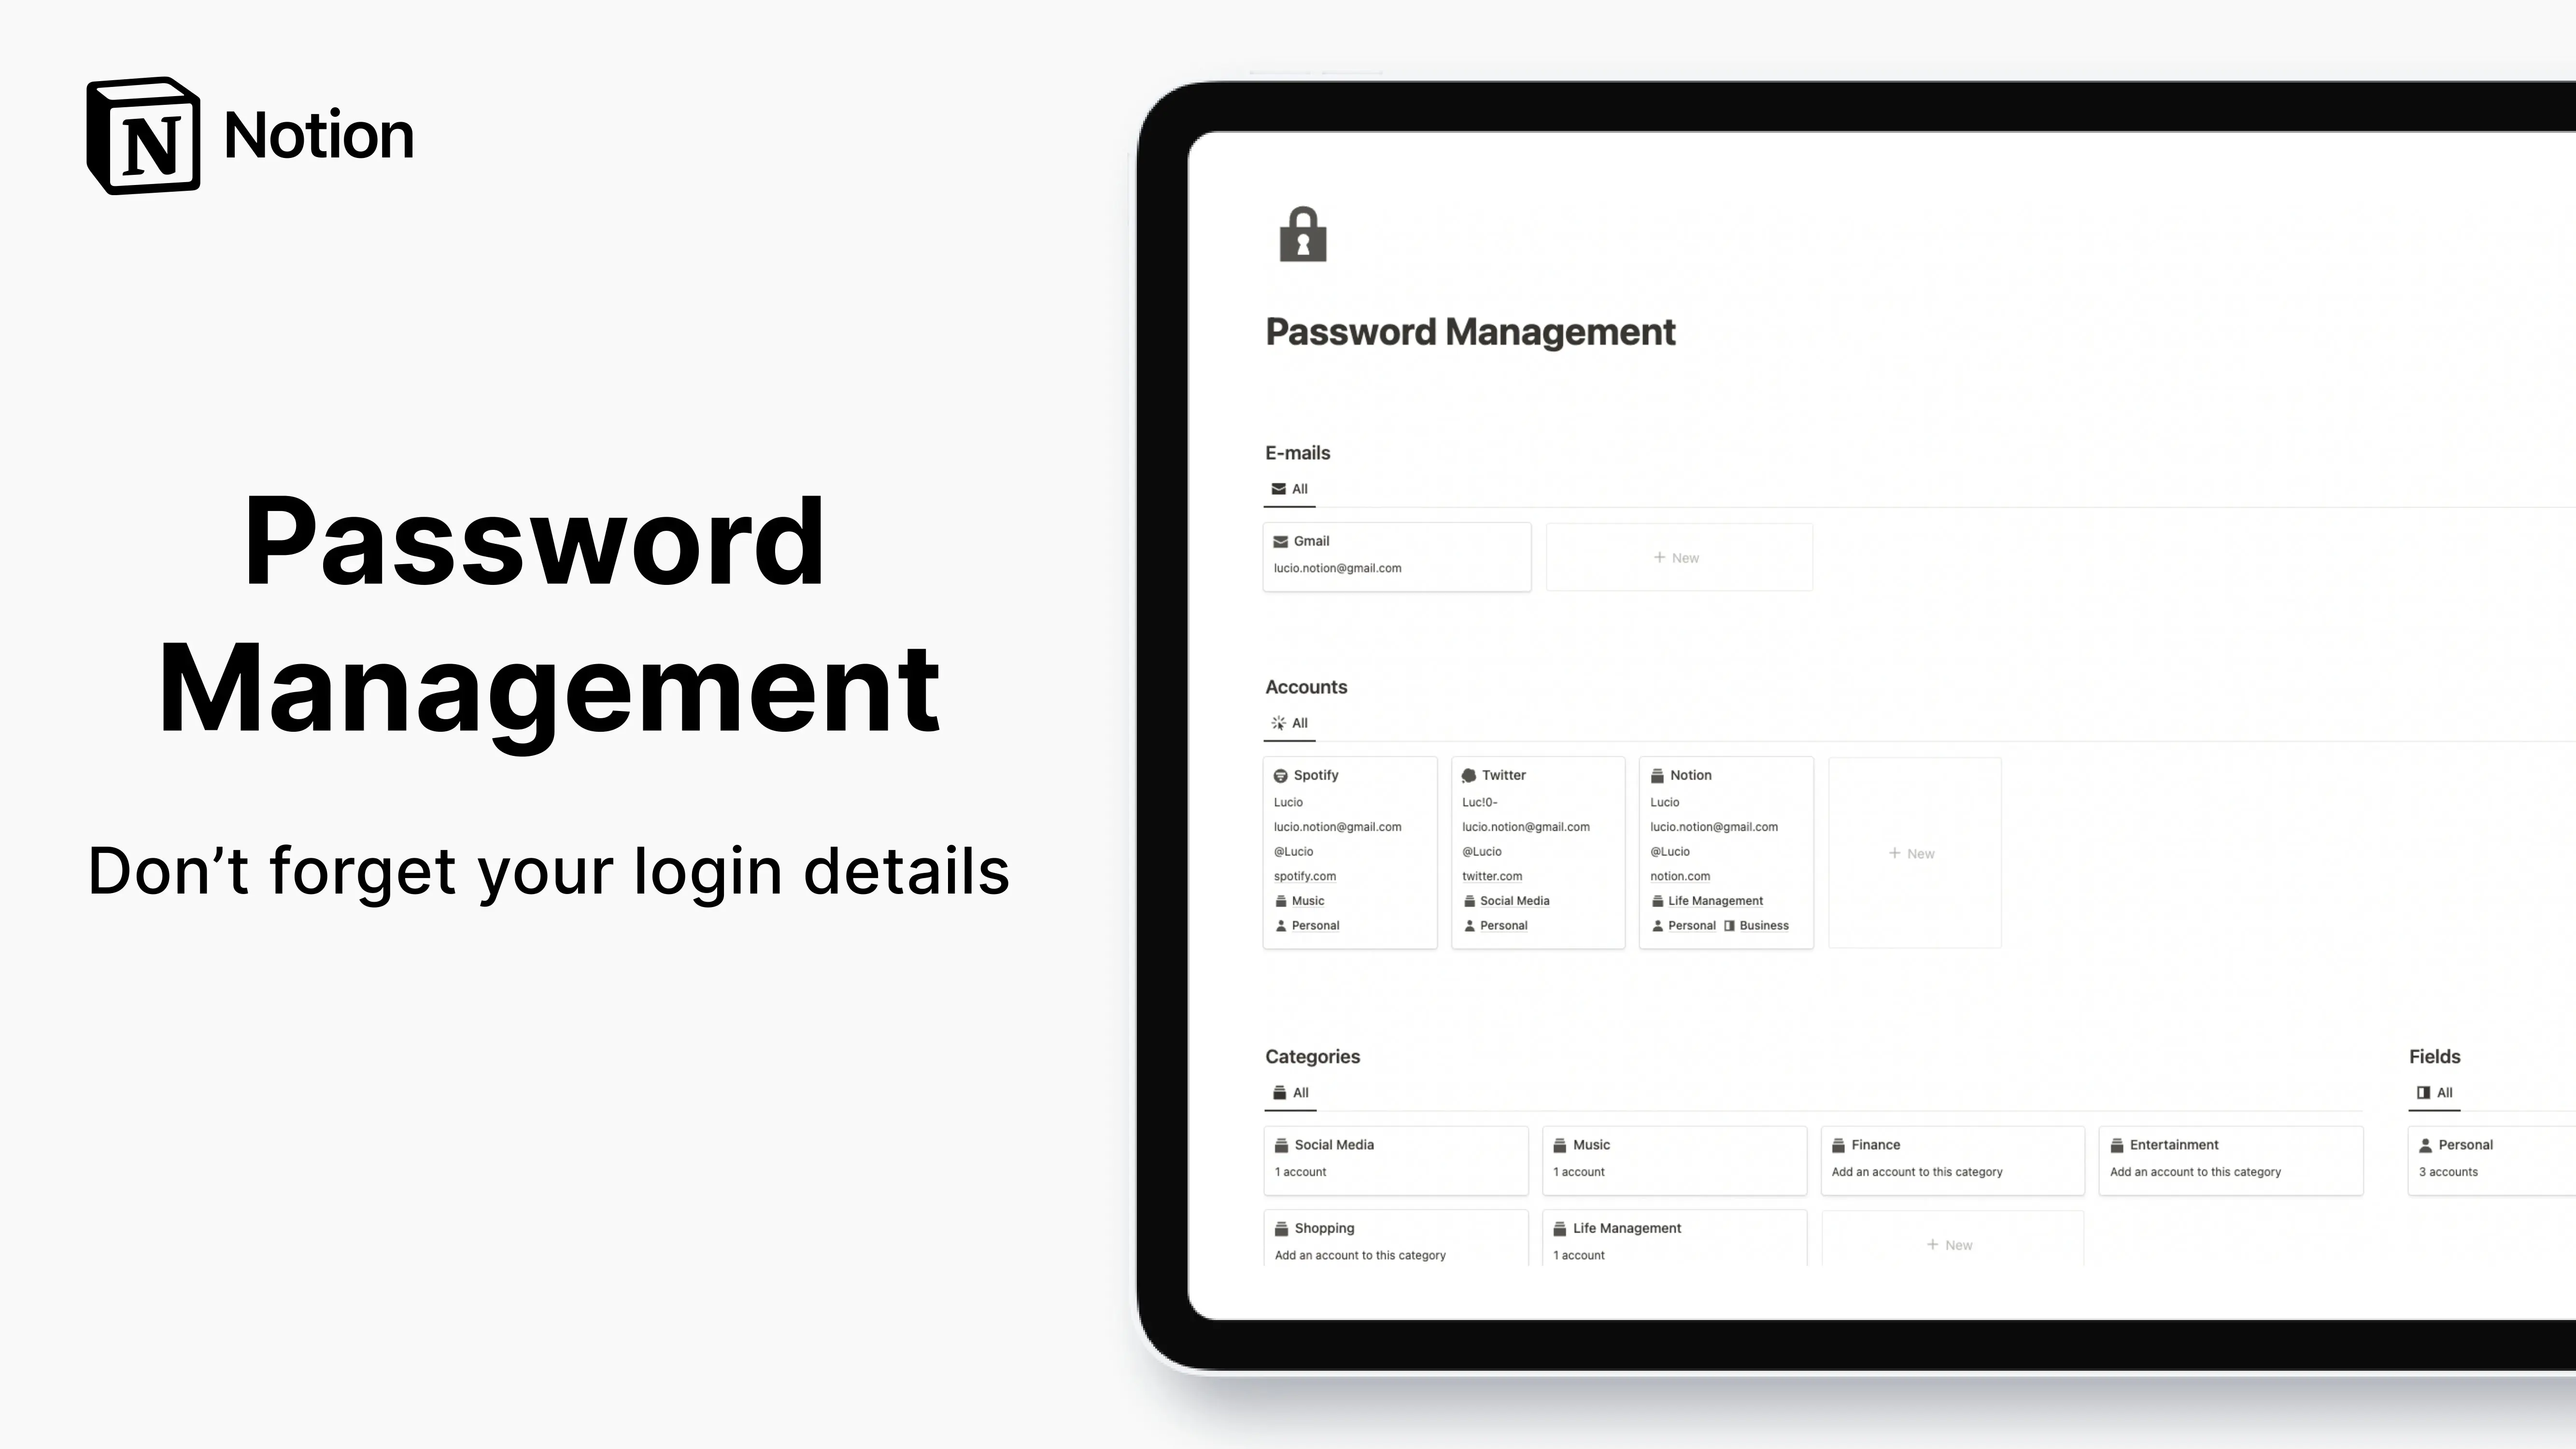 Password Management image